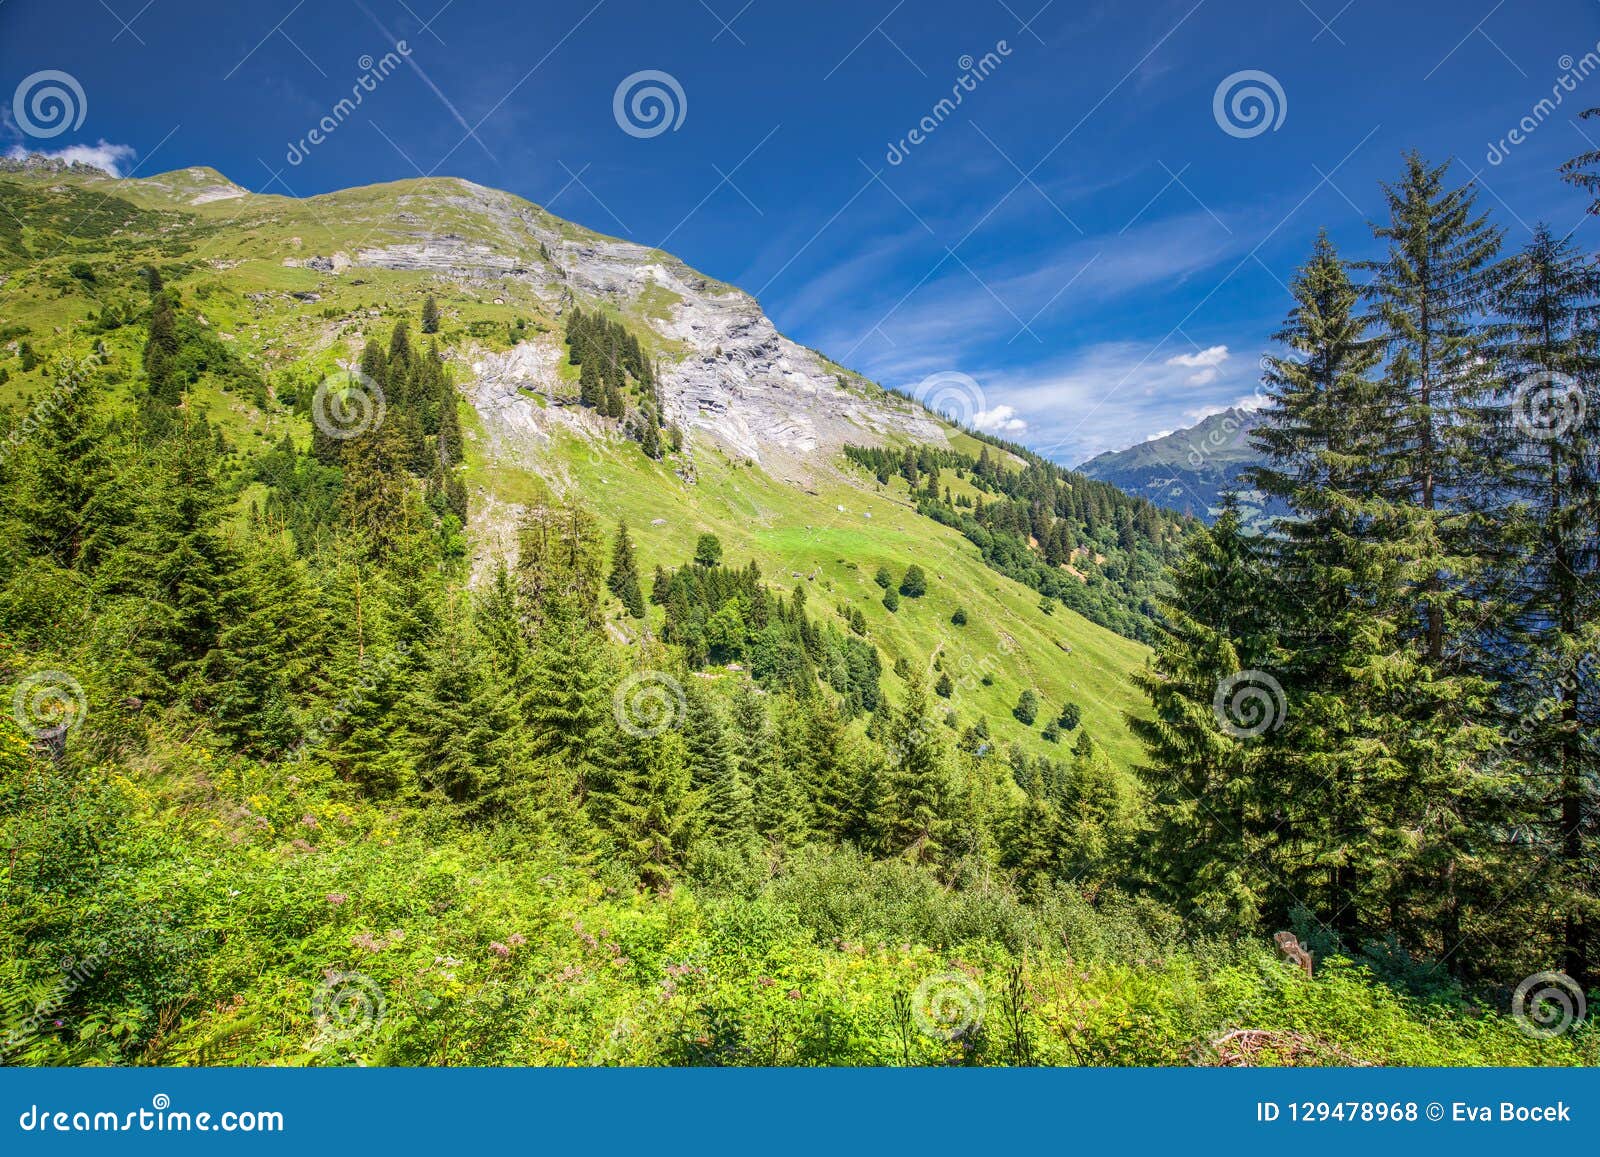 view of elm village and swiss mountains - piz segnas, piz sardona, laaxer stockli from ampachli, glarus, switzerland, europe